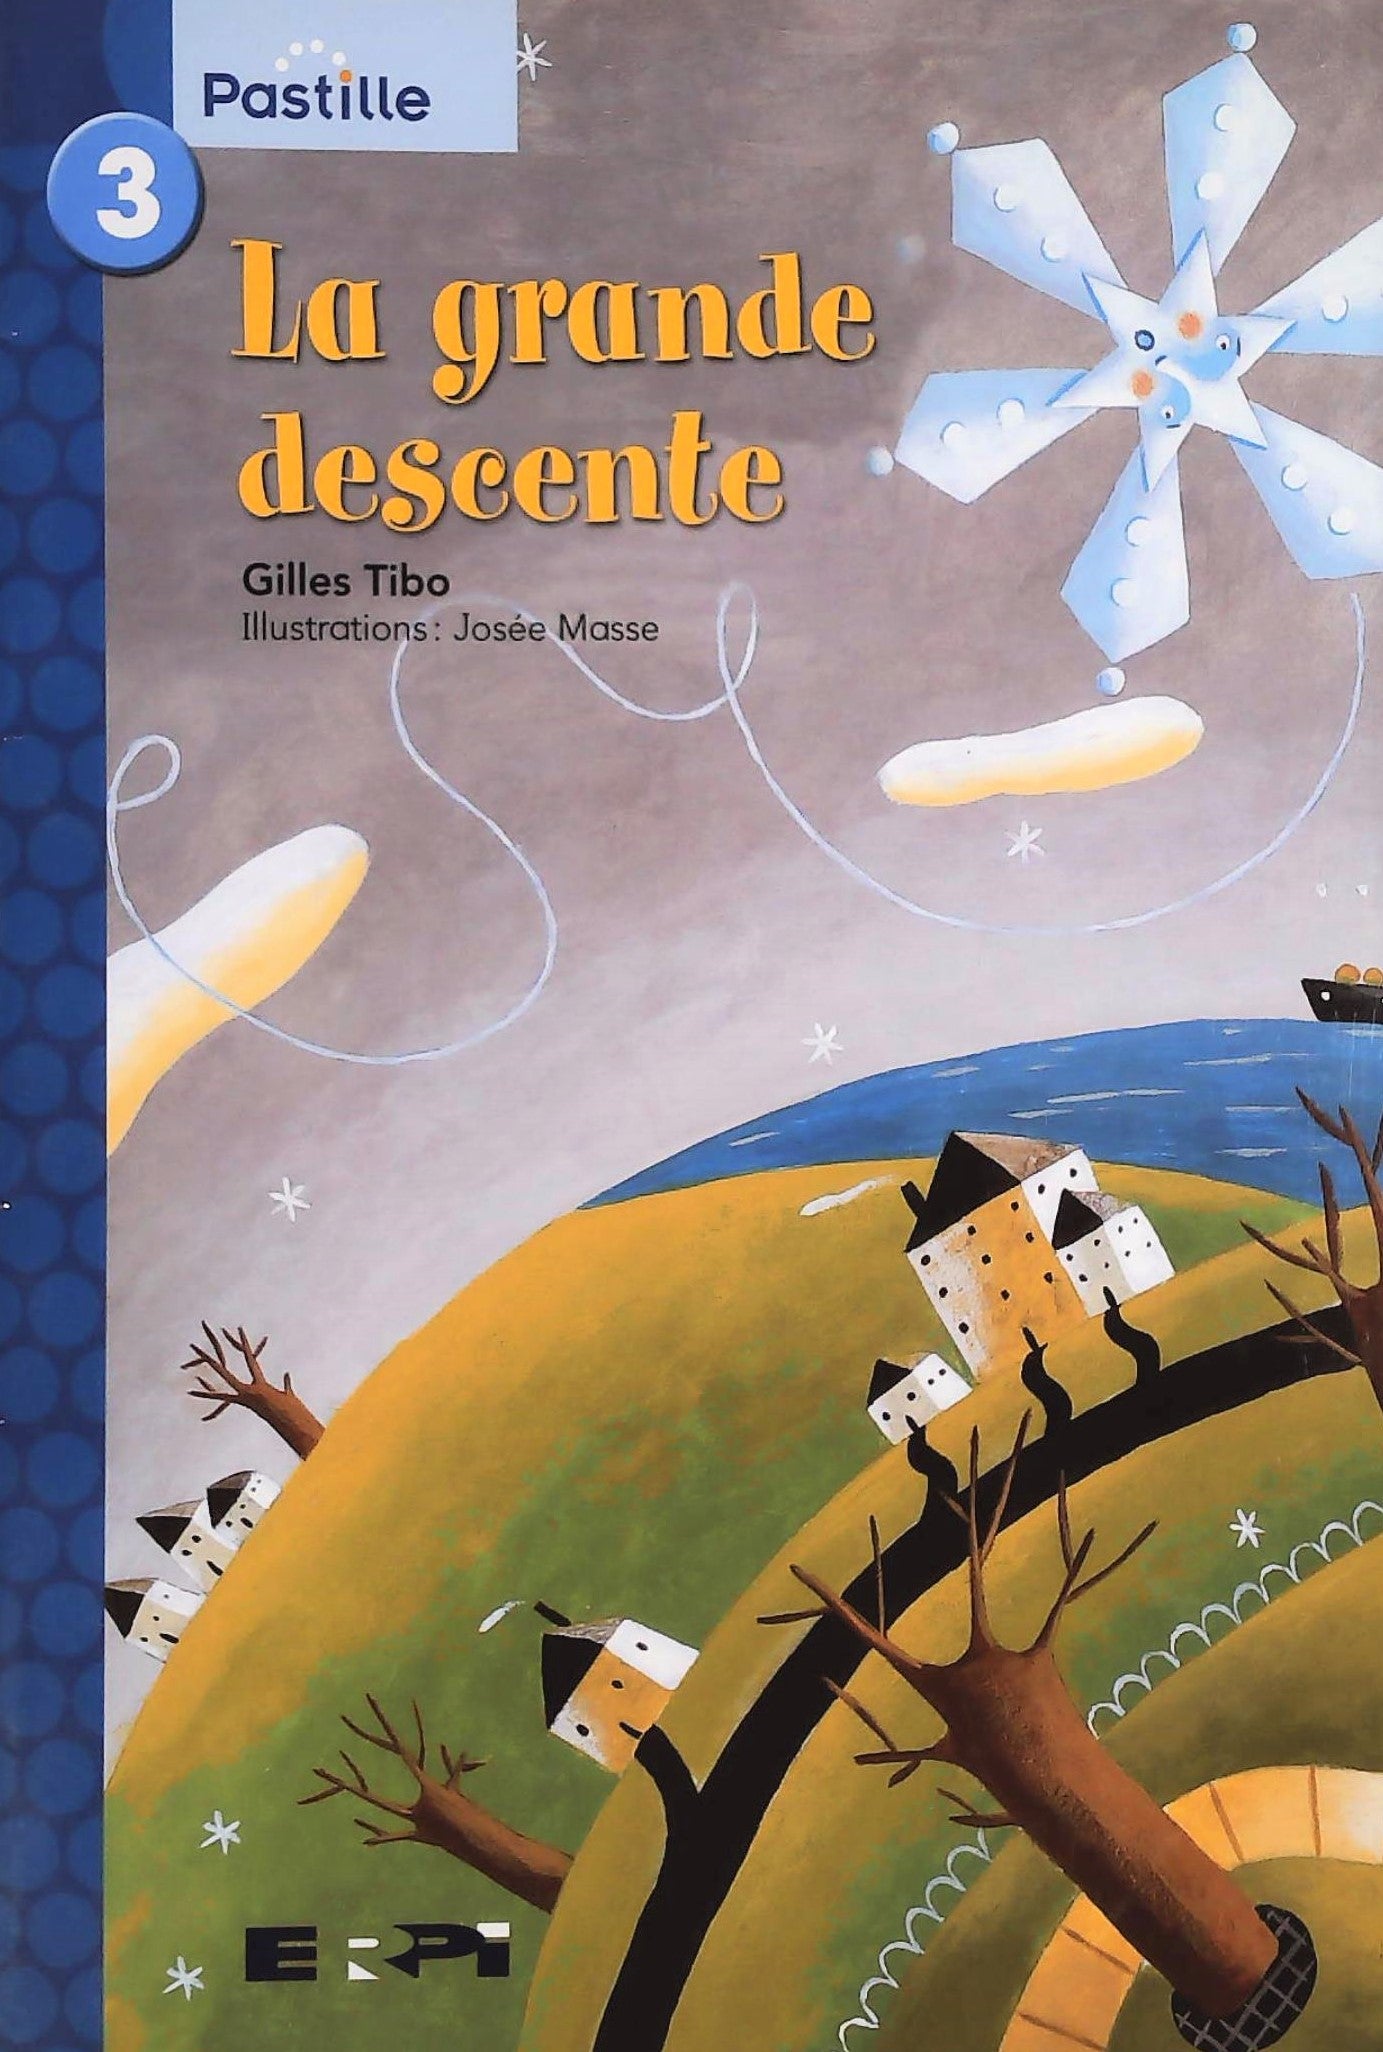 Livre ISBN 2761323629 Pastille (série bleue) # 3 : La grande descente (Gilles Tibo)